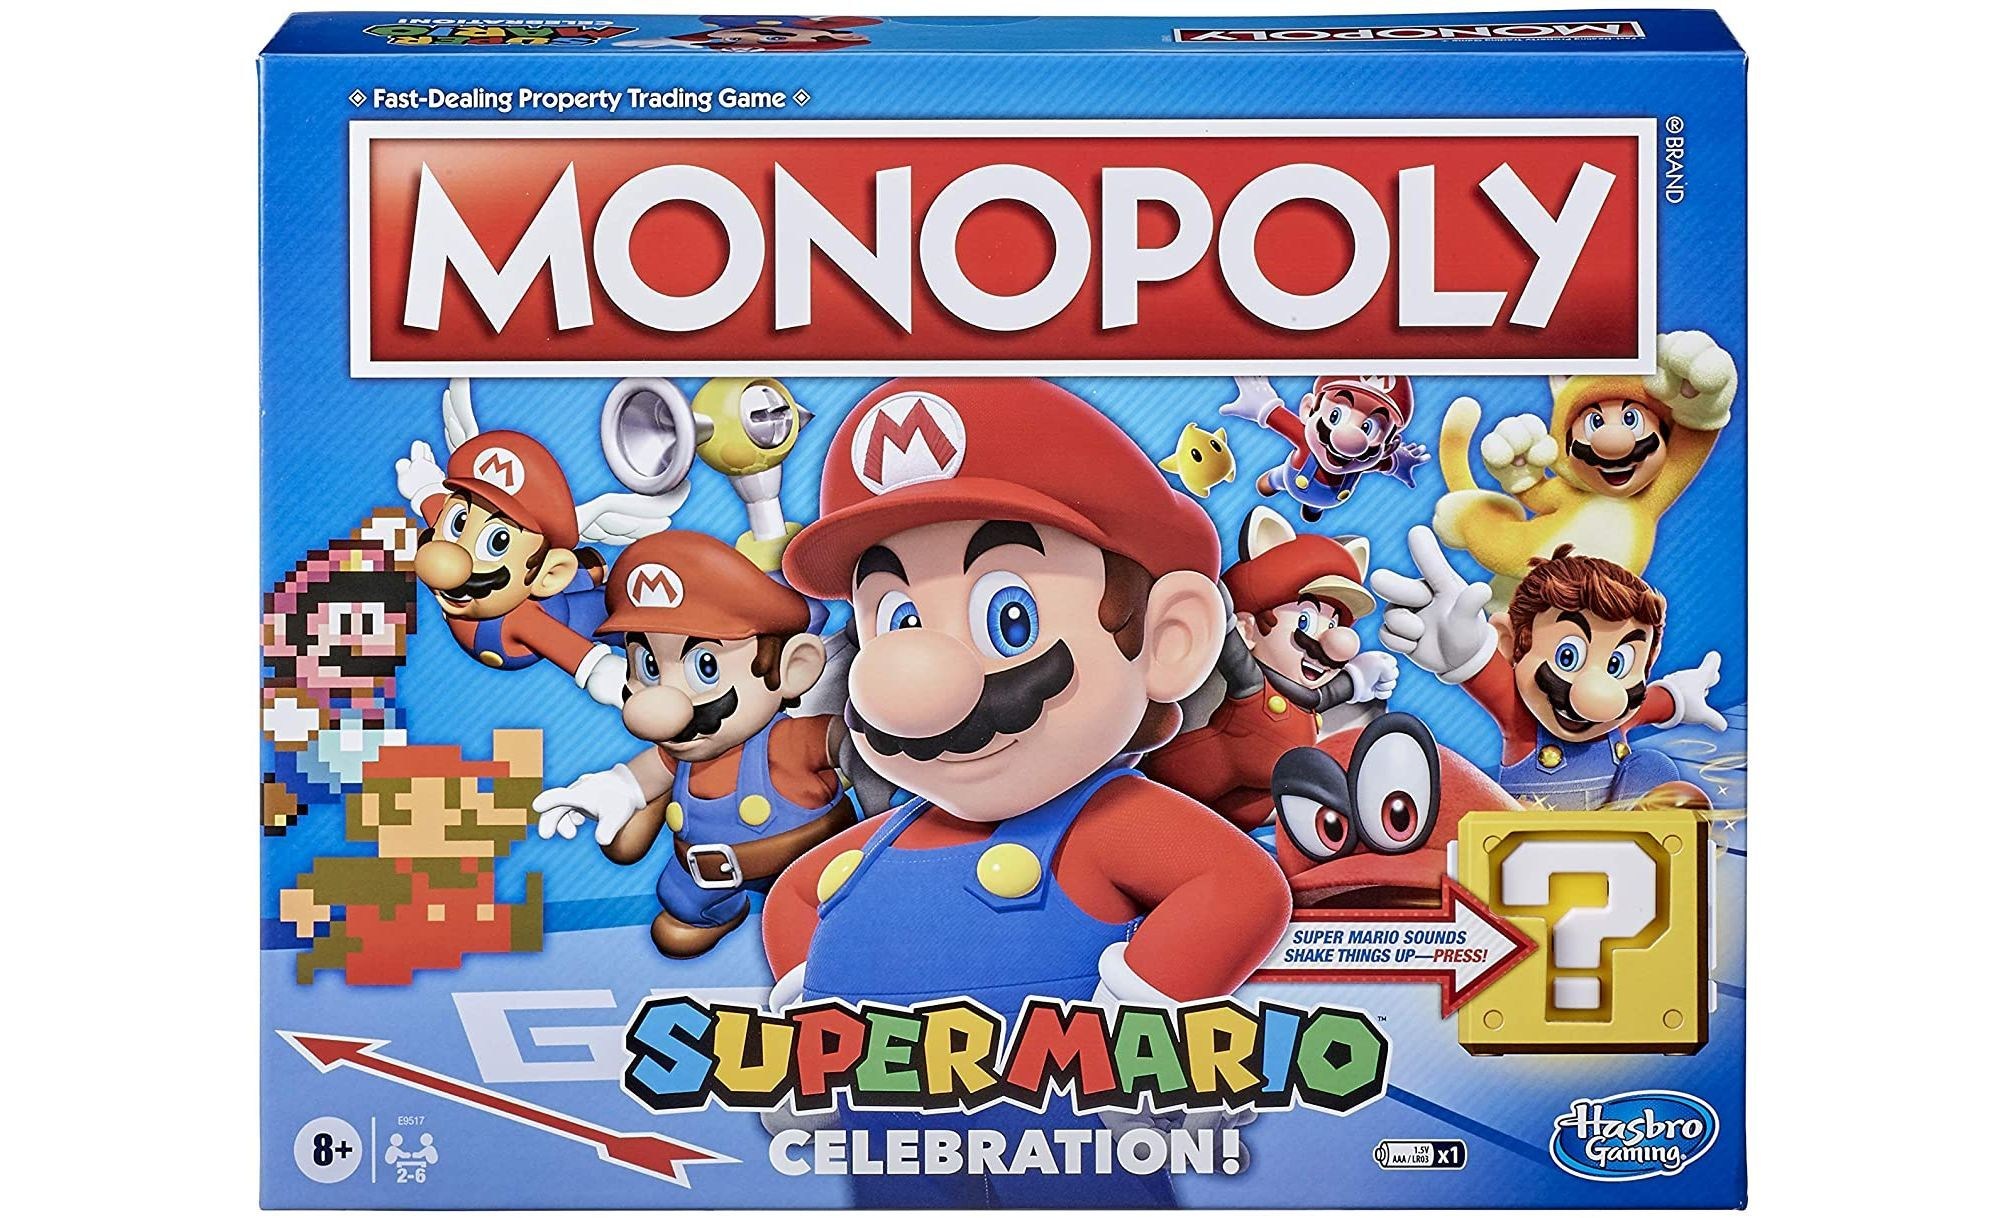 Super Mario 35th anniversary merch revealed – Mario Monopoly and Jenga